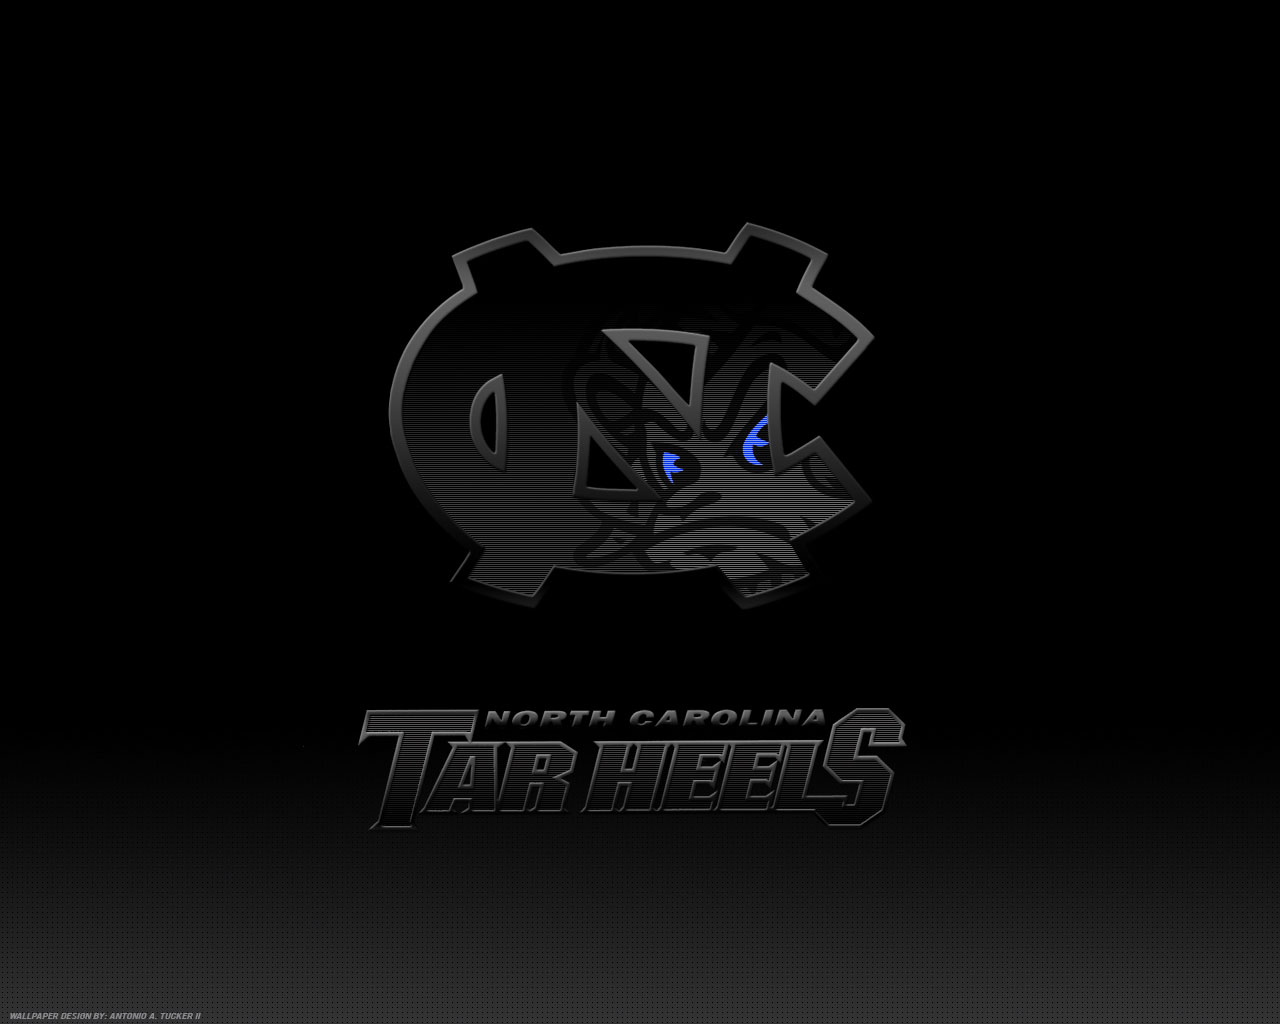 UNC Tar Heels Logo background wallpaper for desktop or web site Get